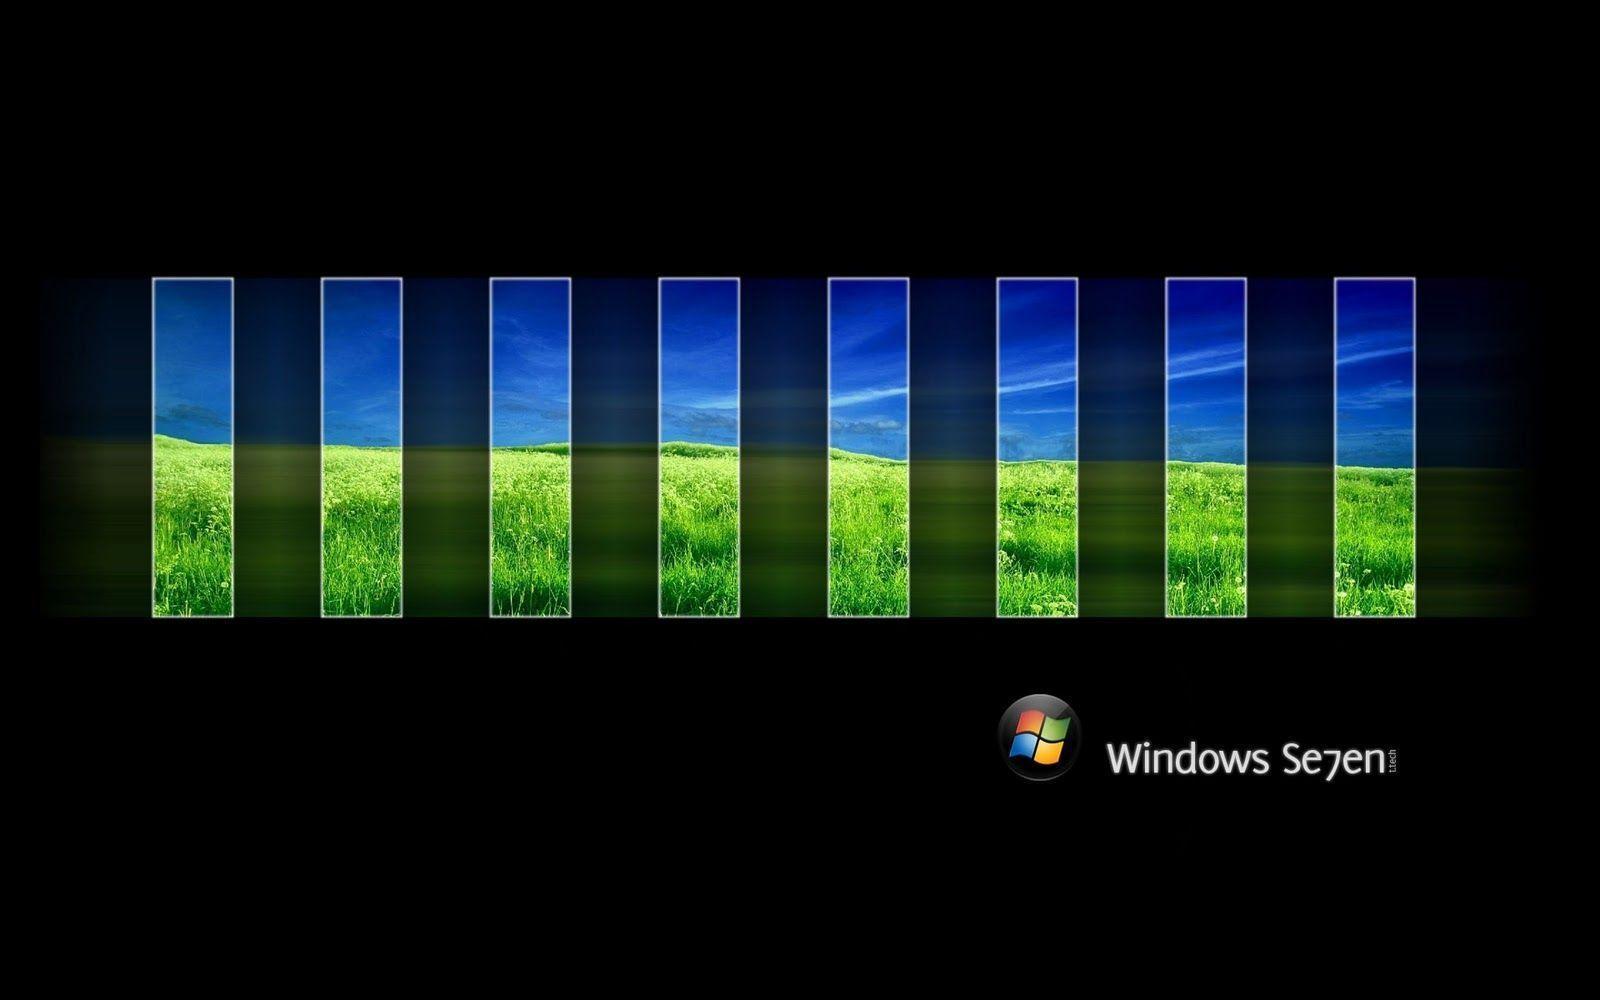 Windows 7 Wallpaper 2012